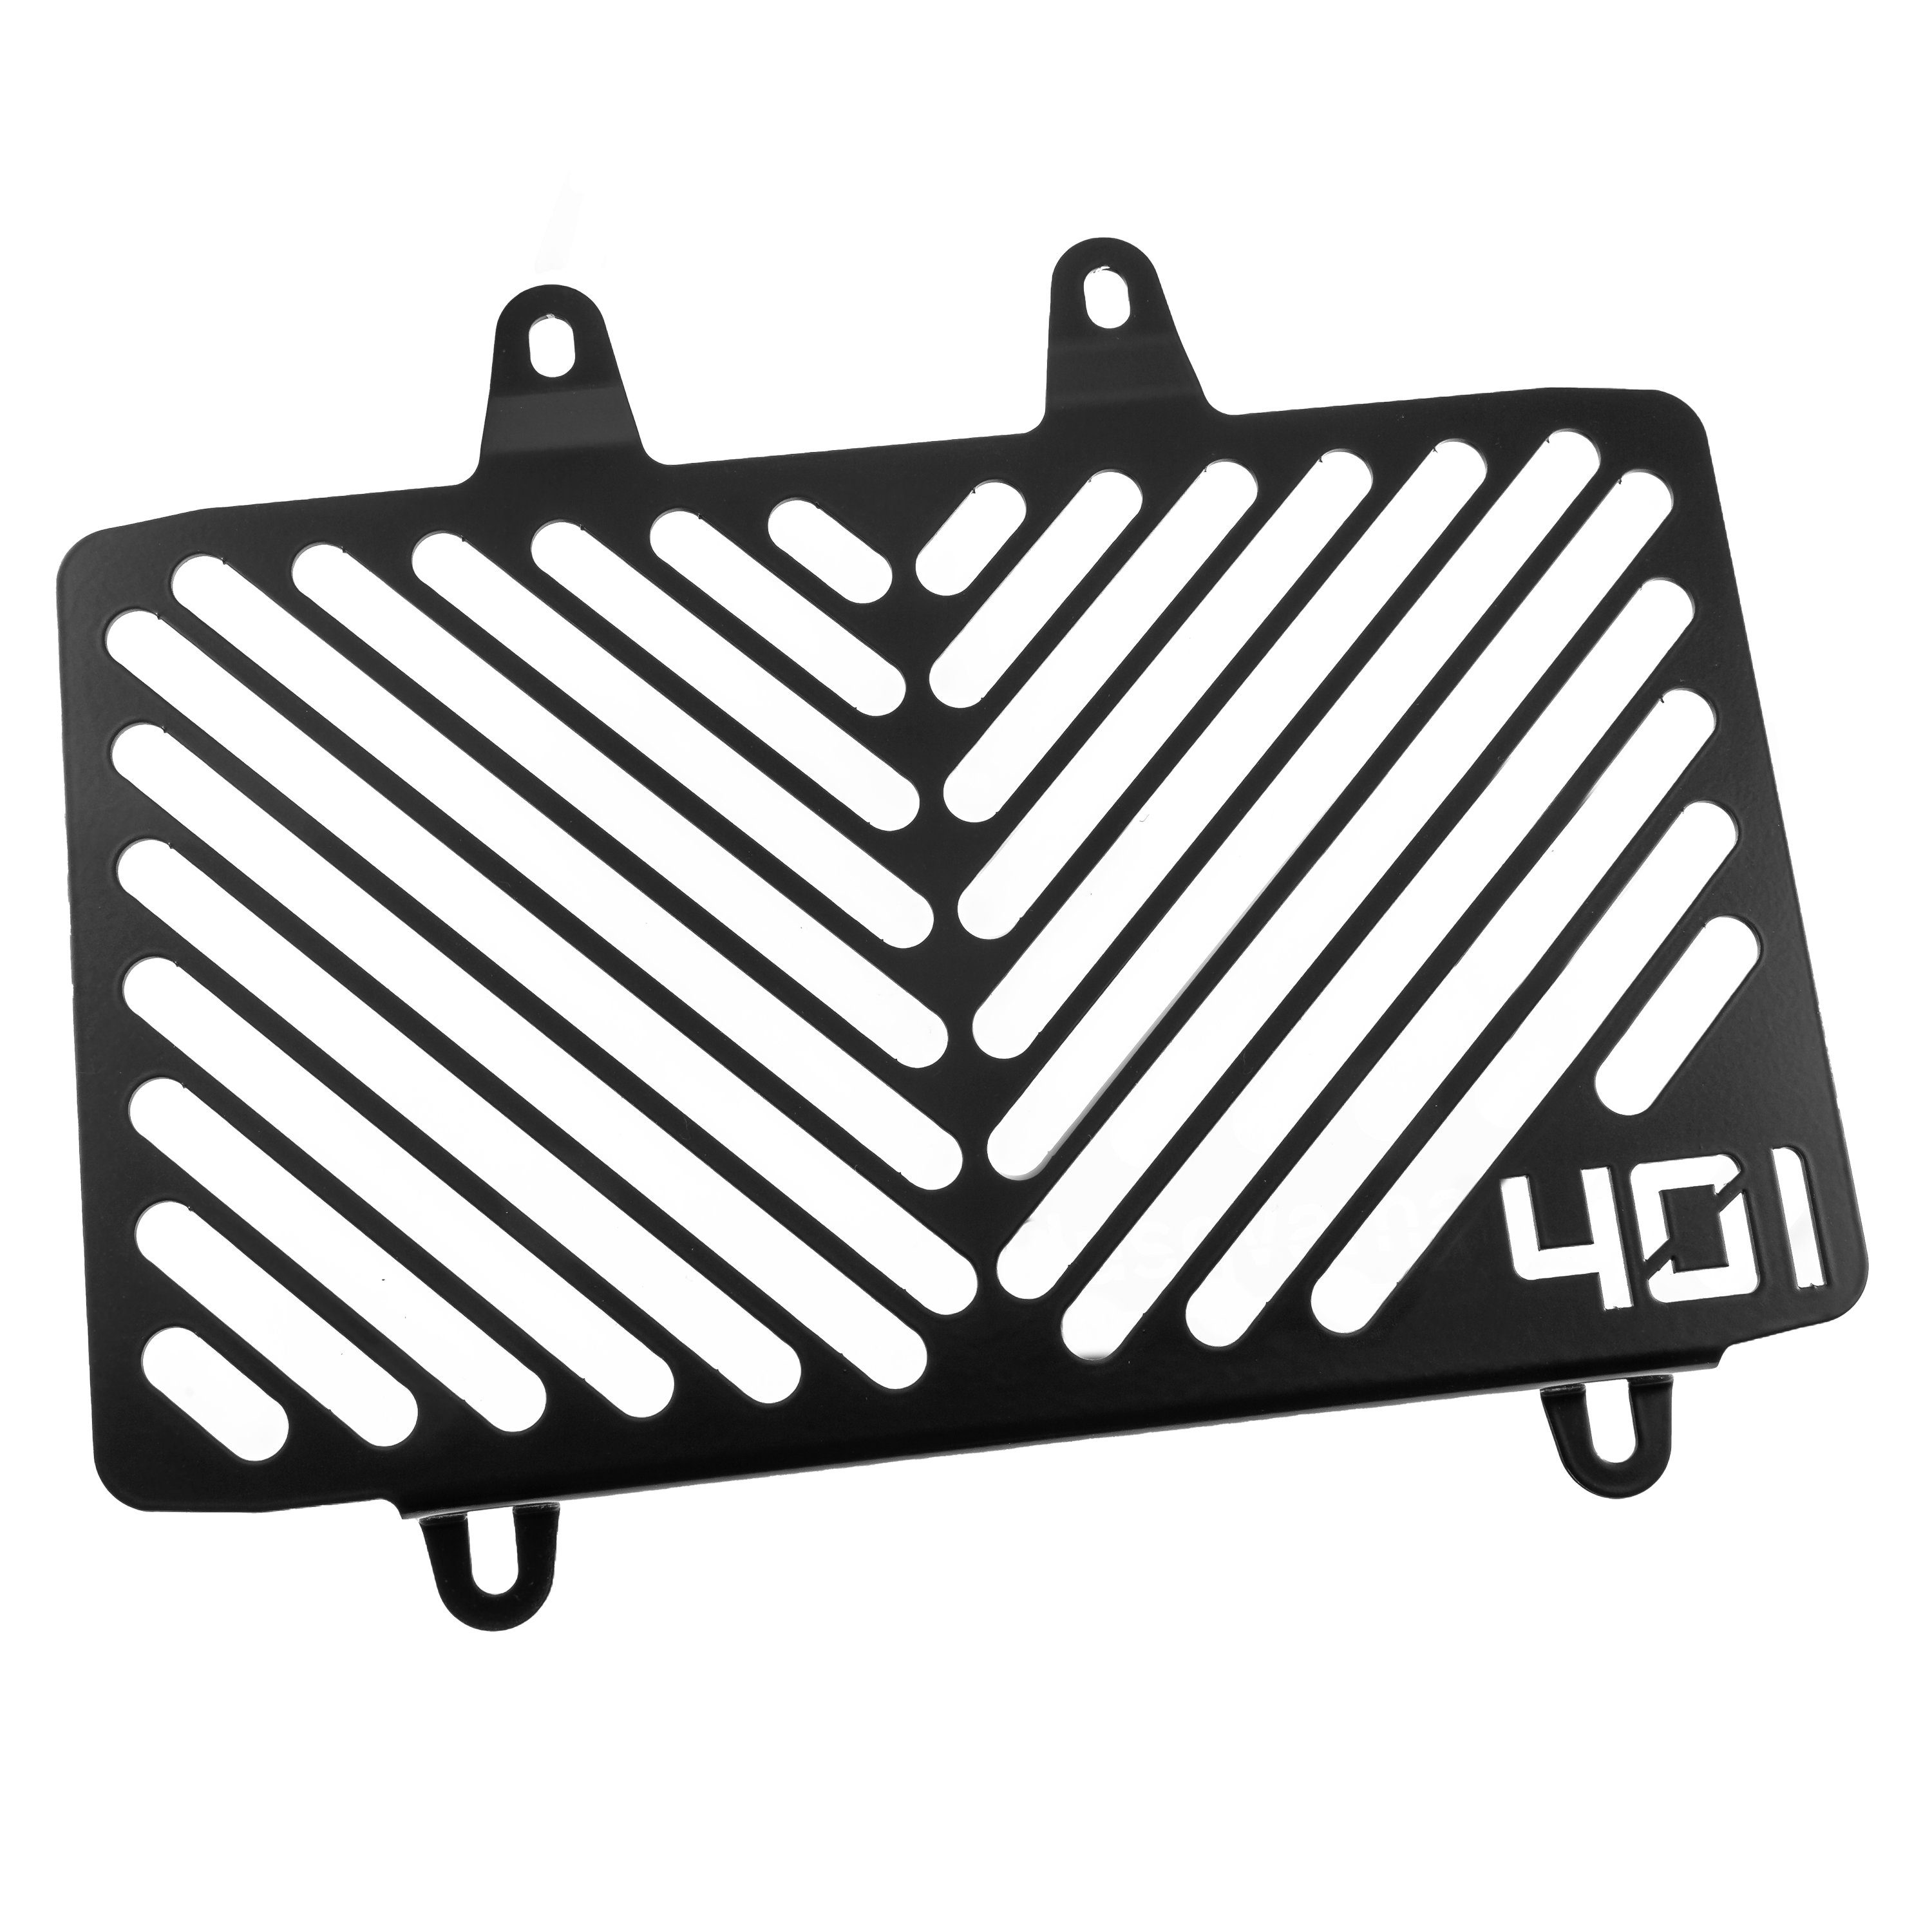 ZIEGER Motorrad-Additiv Kühlerabdeckung kompatibel mit Husqvarna Vitpilen 401 Logo schwarz, Motorradkühlerabdeckung